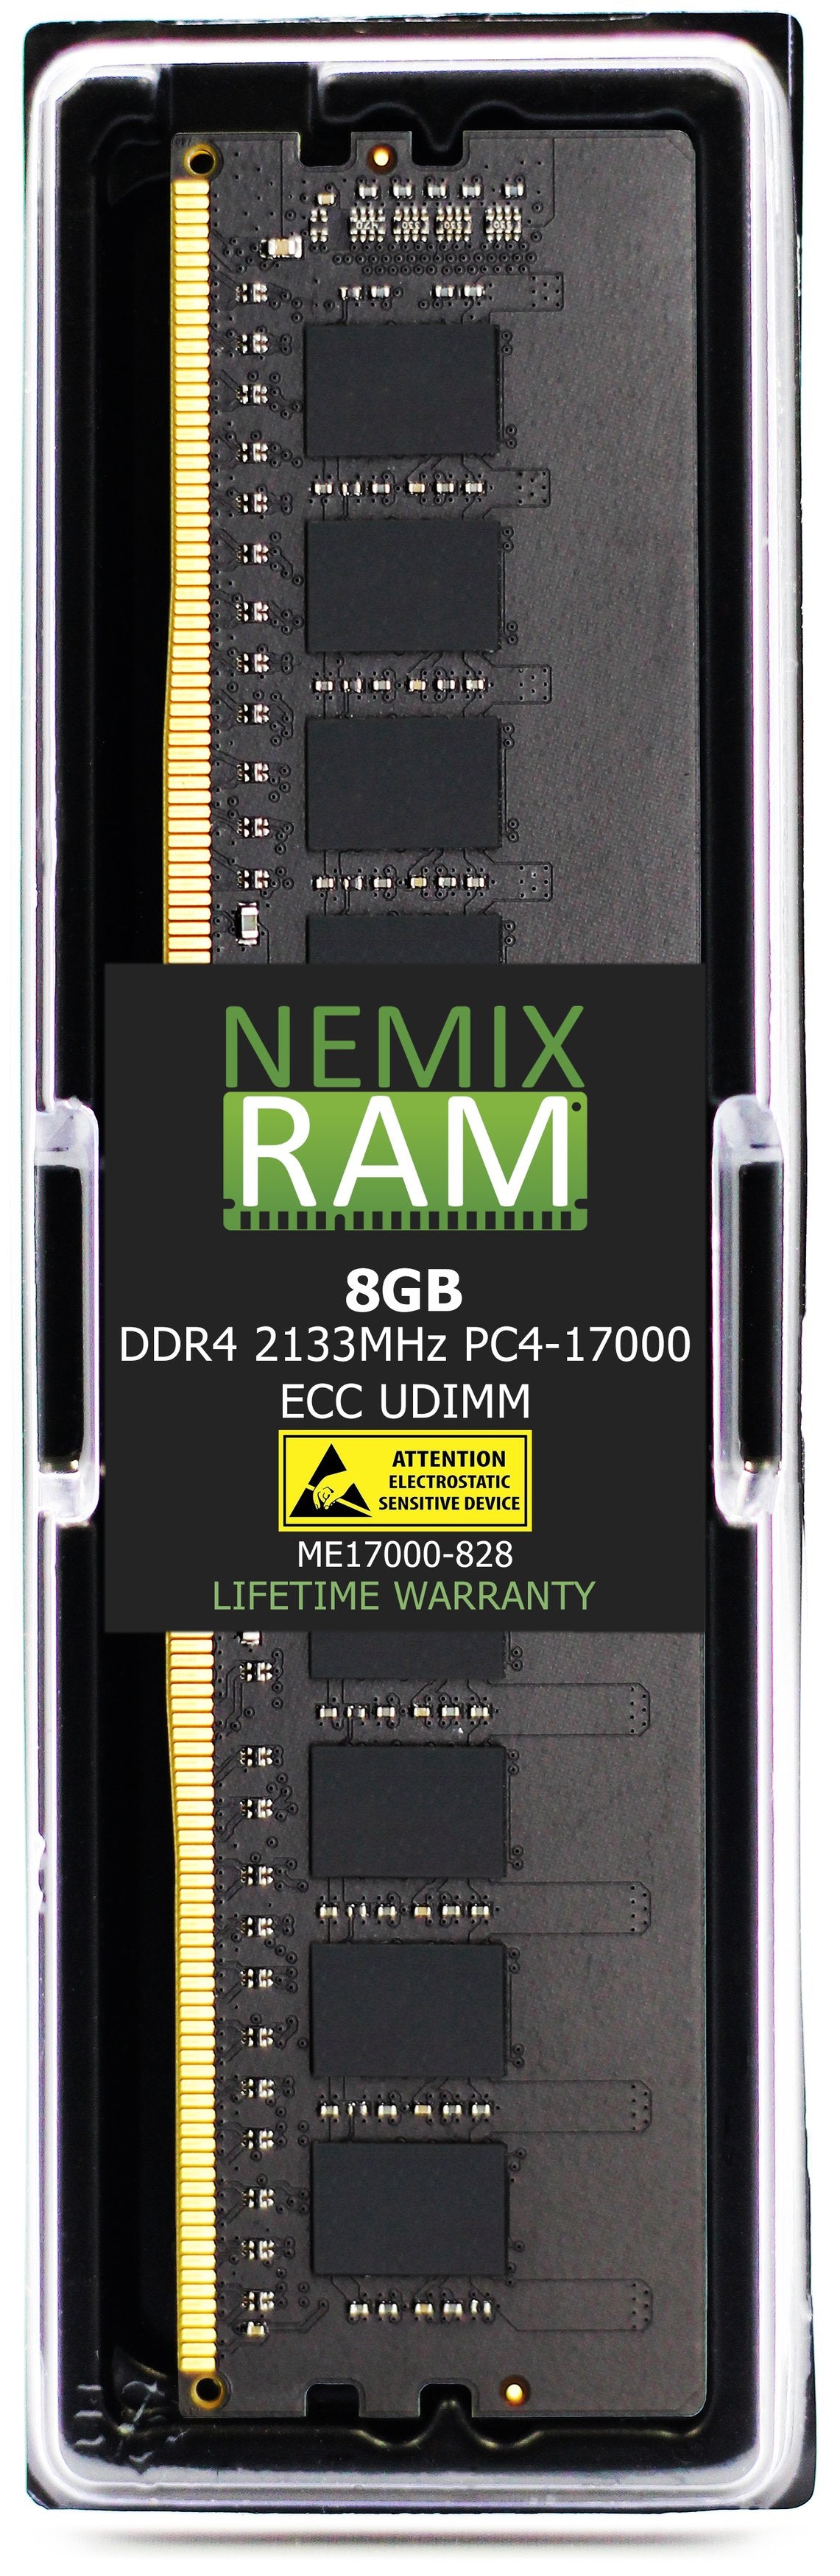 8GB DDR4 2133MHZ PC4-17000 ECC UDIMM Compatible with Supermicro MEM-DR480L-SL01-EU21